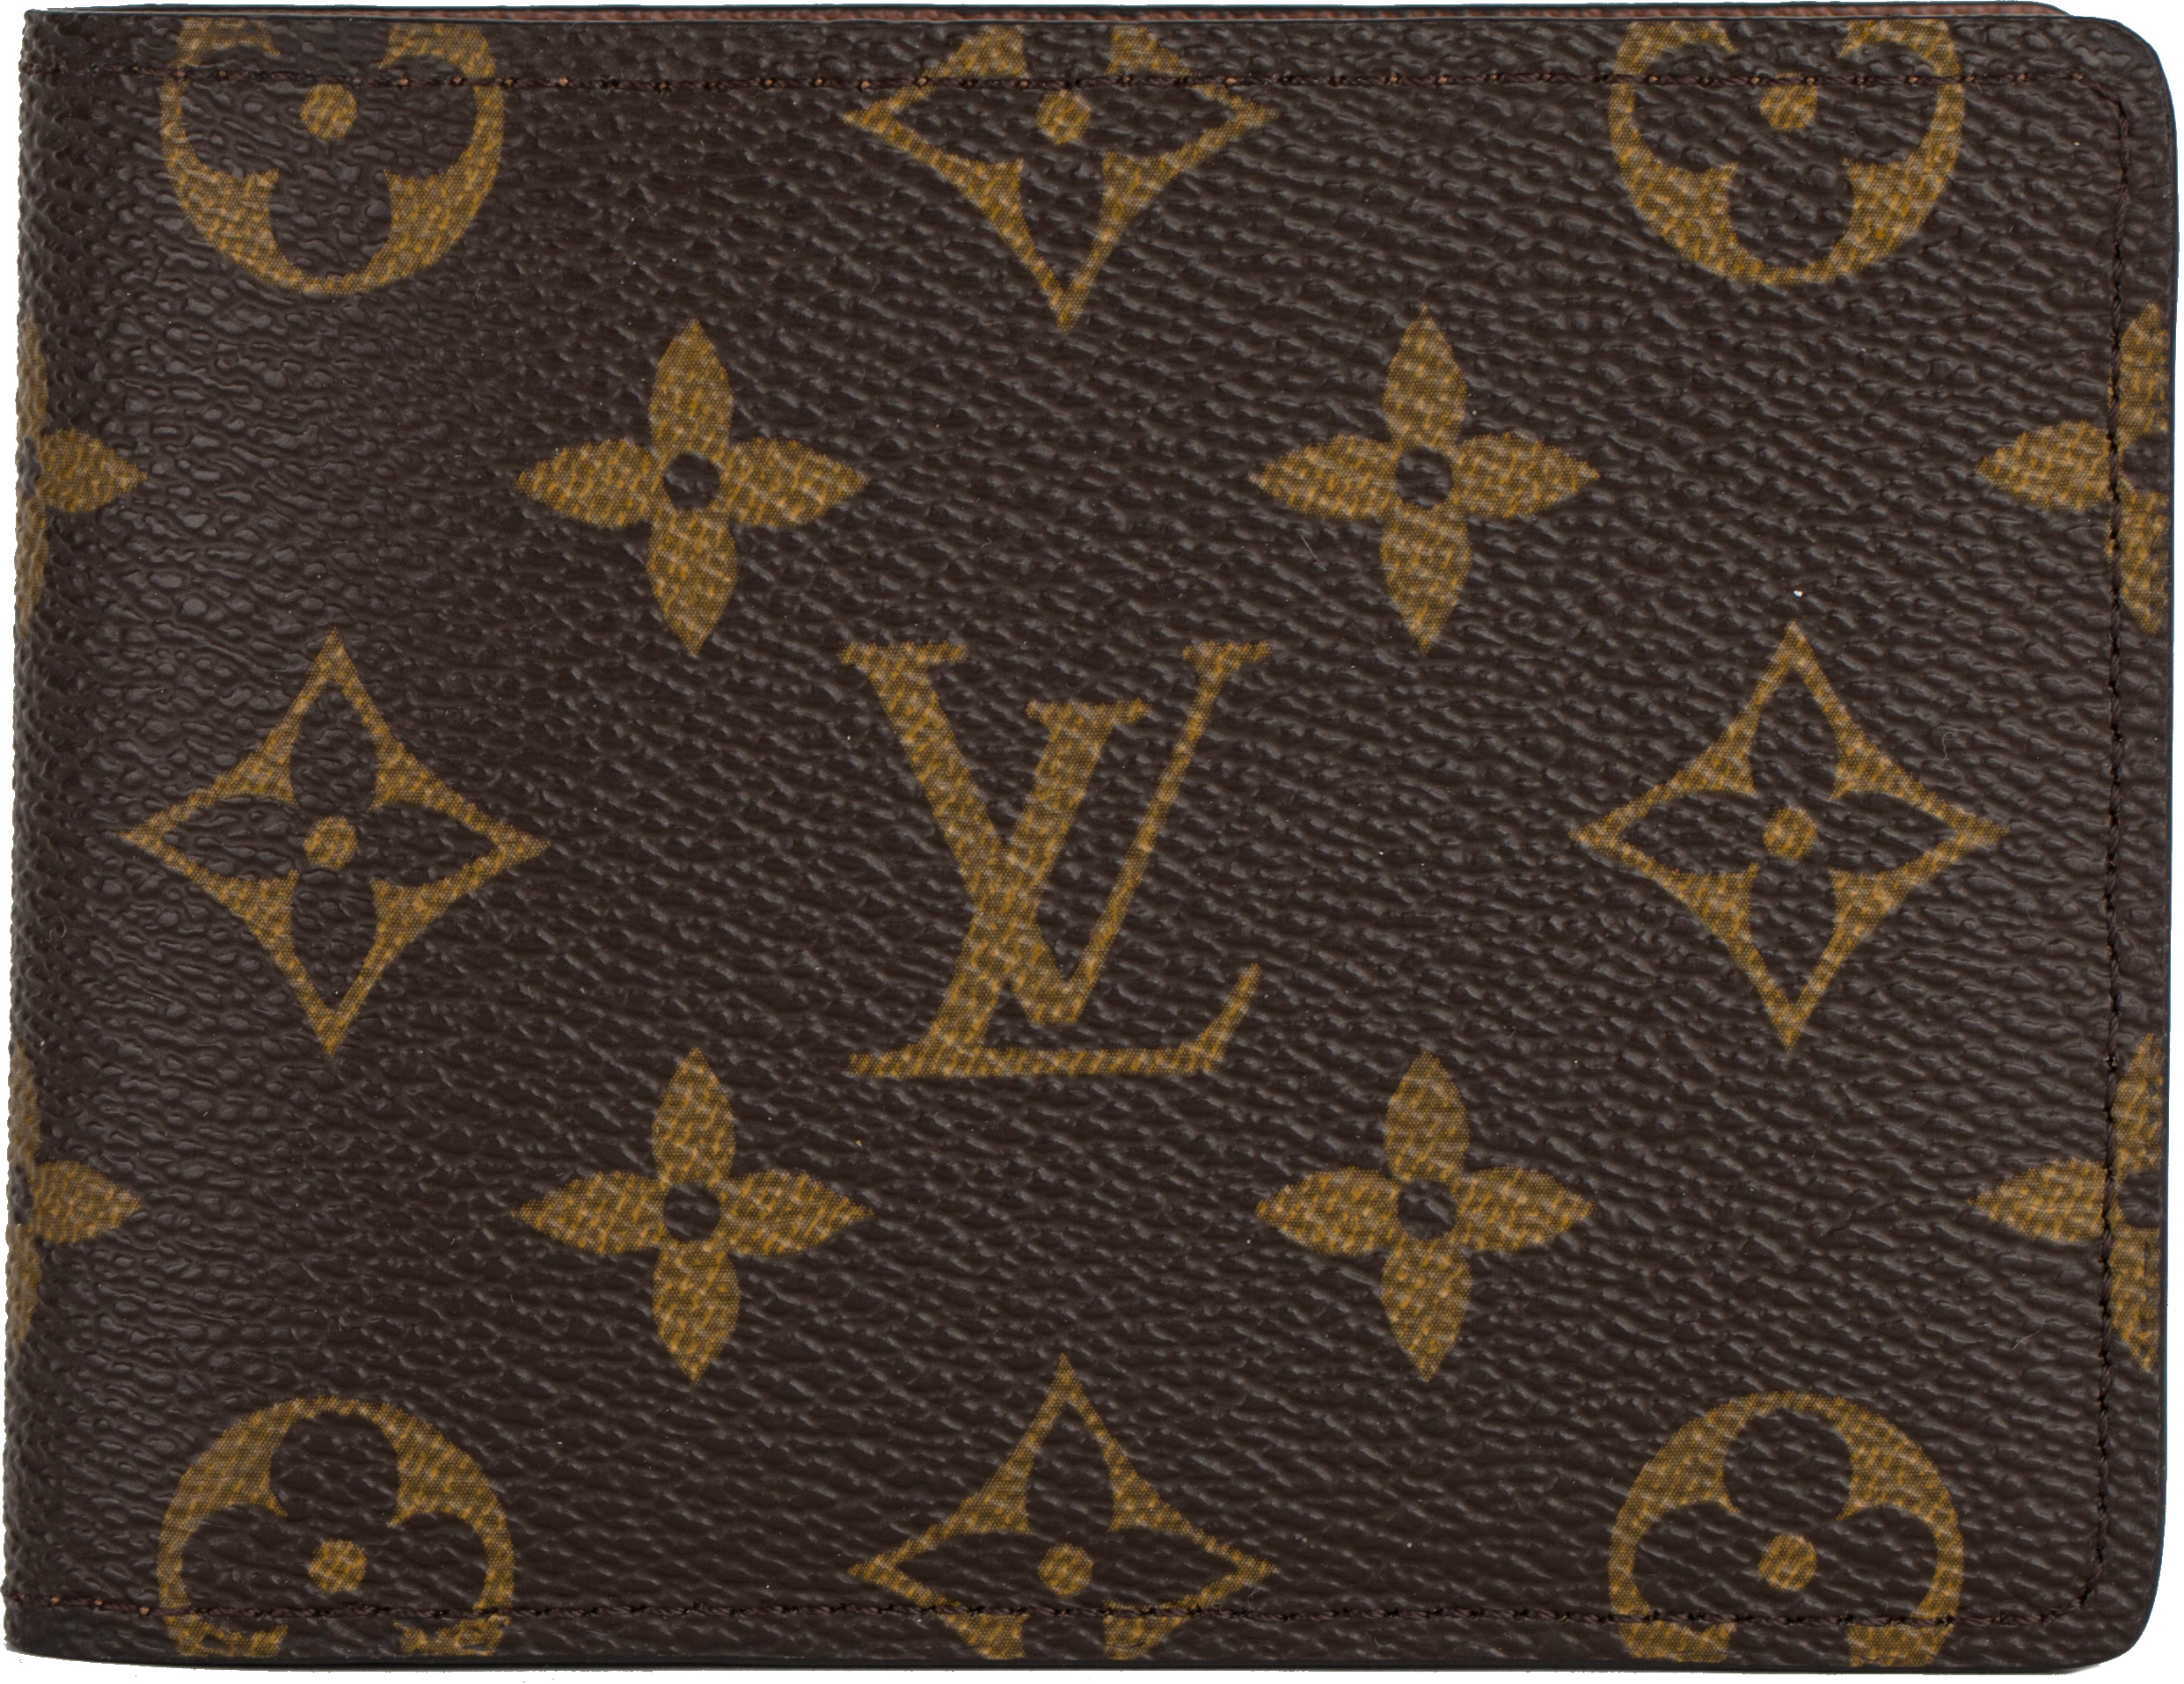 Louis Vuittonのアクセサリーを購入 - StockX